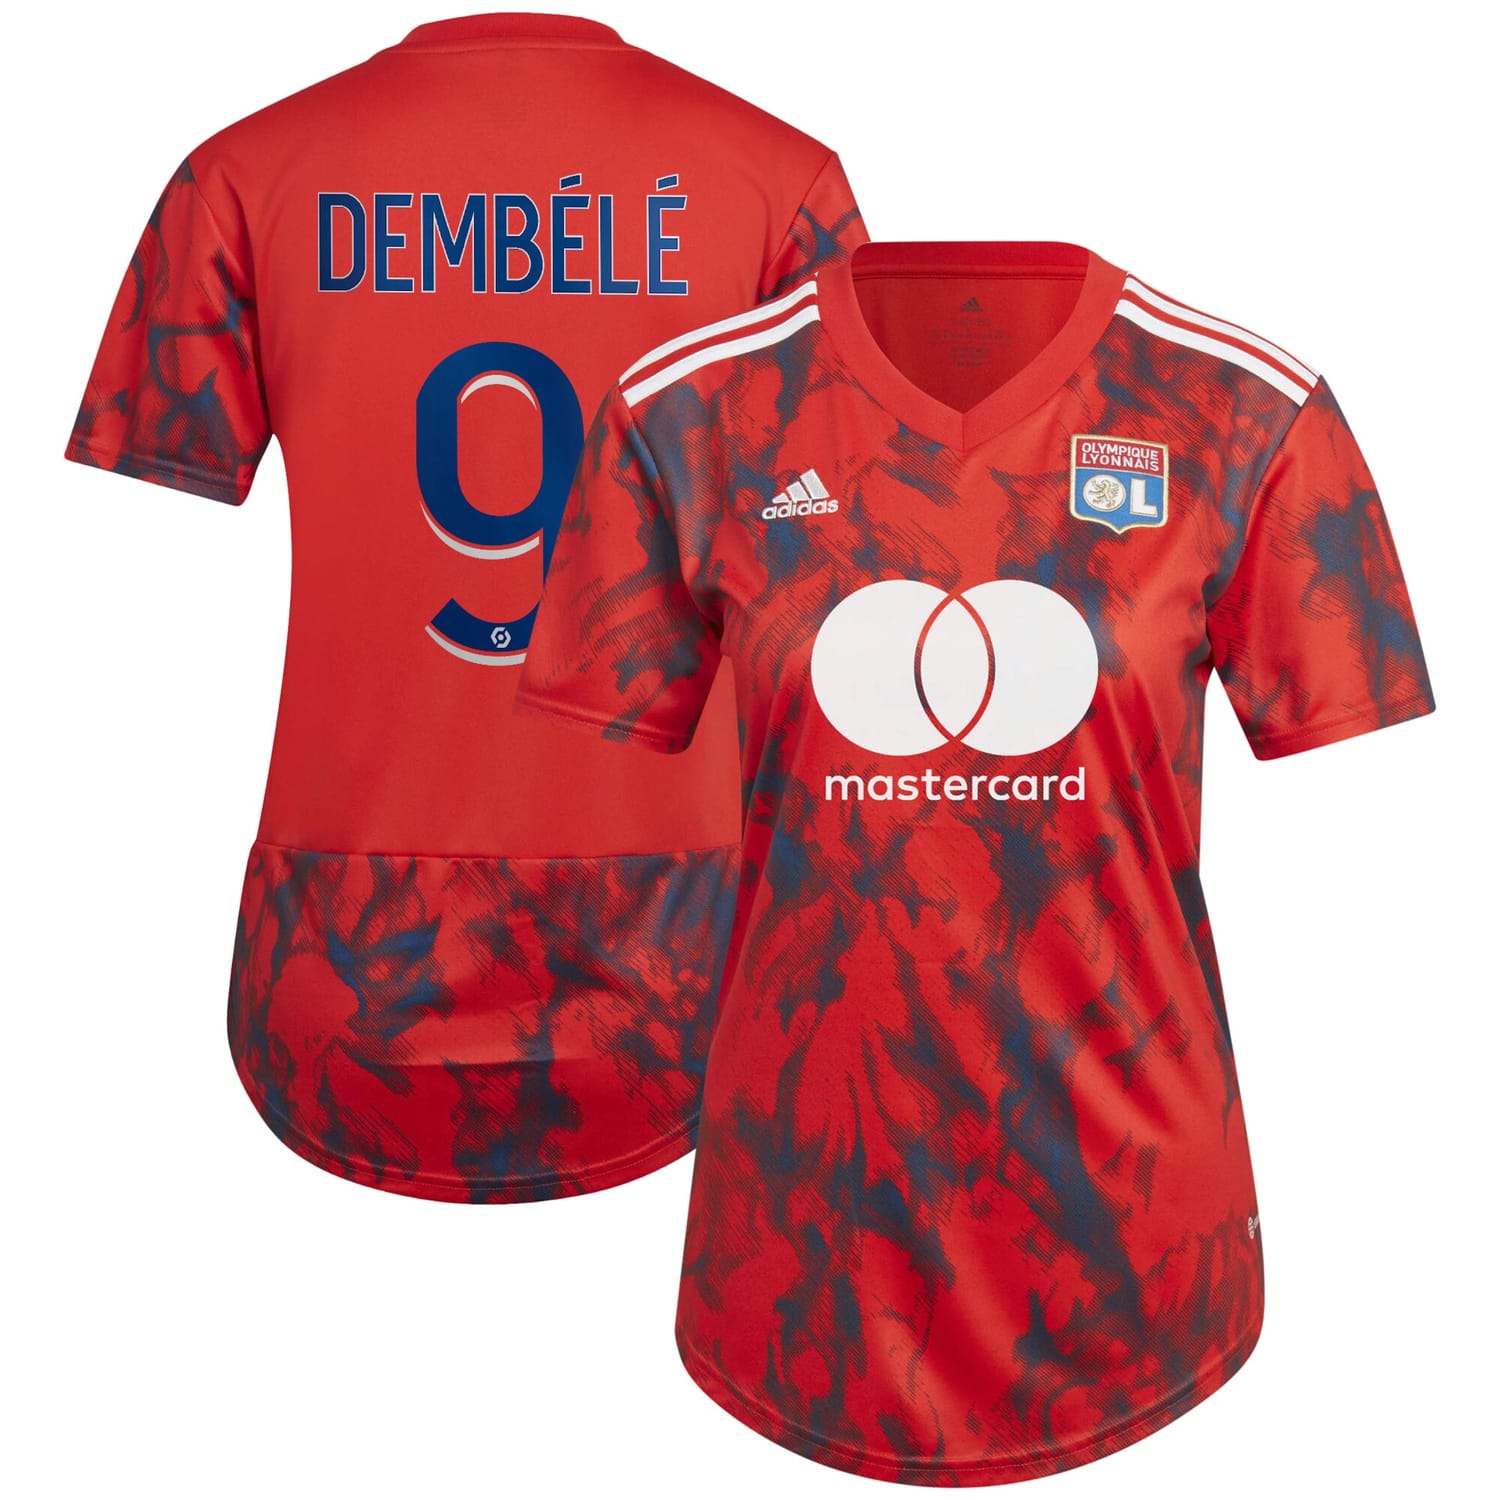 Ligue 1 Olympique Lyonnais Away Jersey Shirt 2022-23 player Dembélé 9 printing for Women